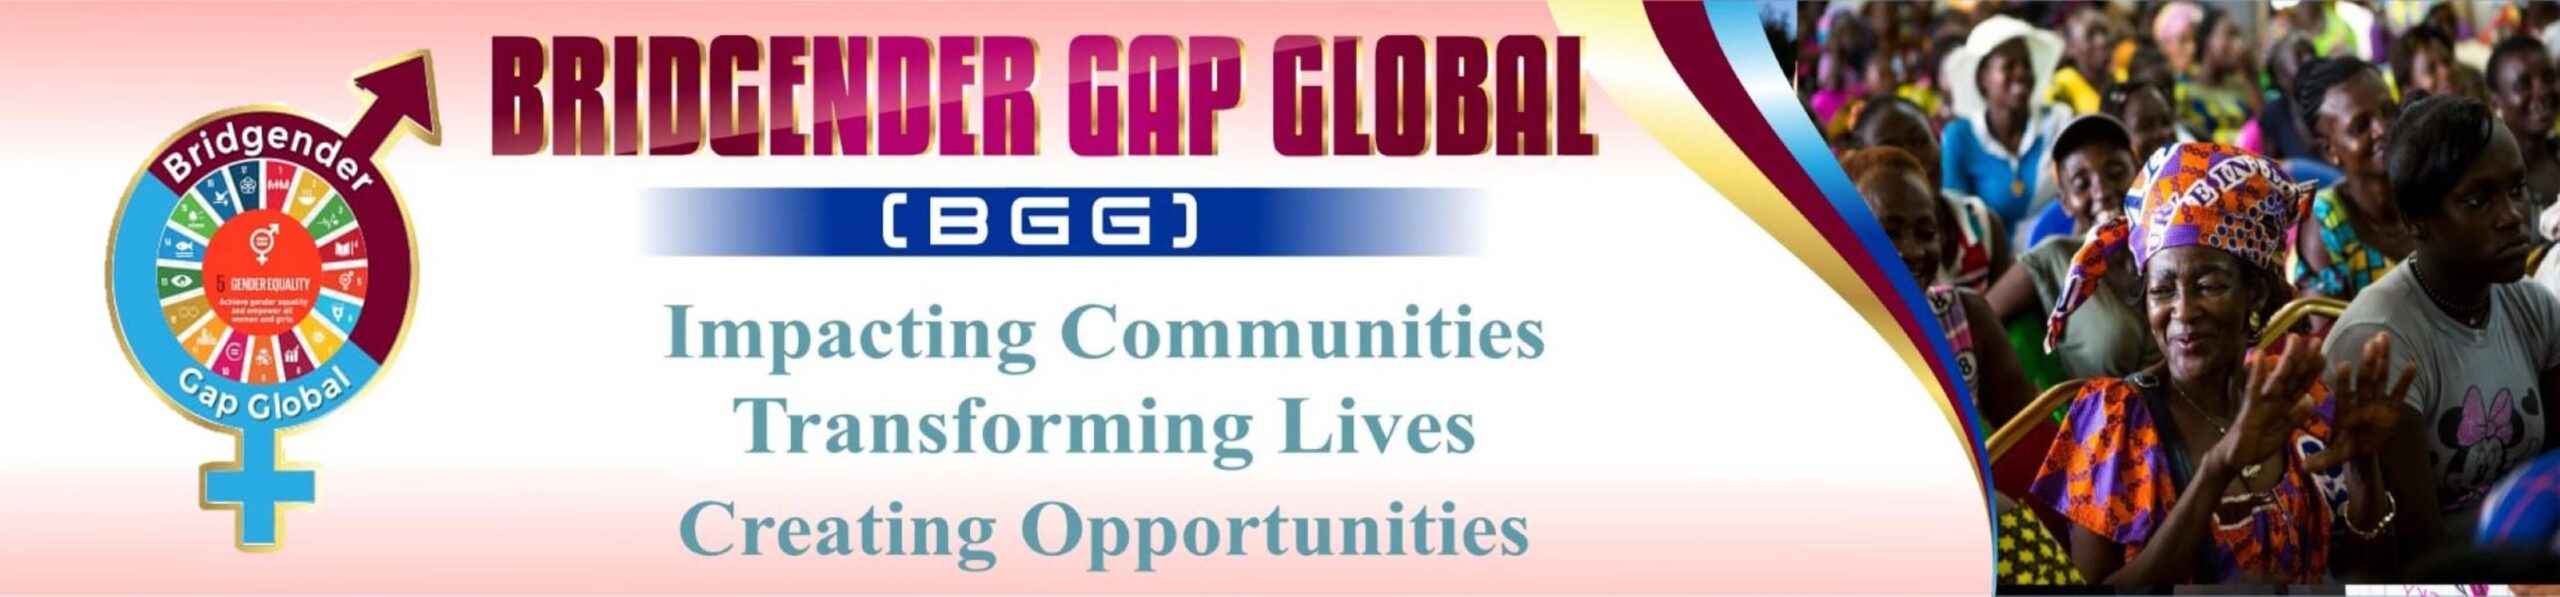 Bridgender Gap Global banner